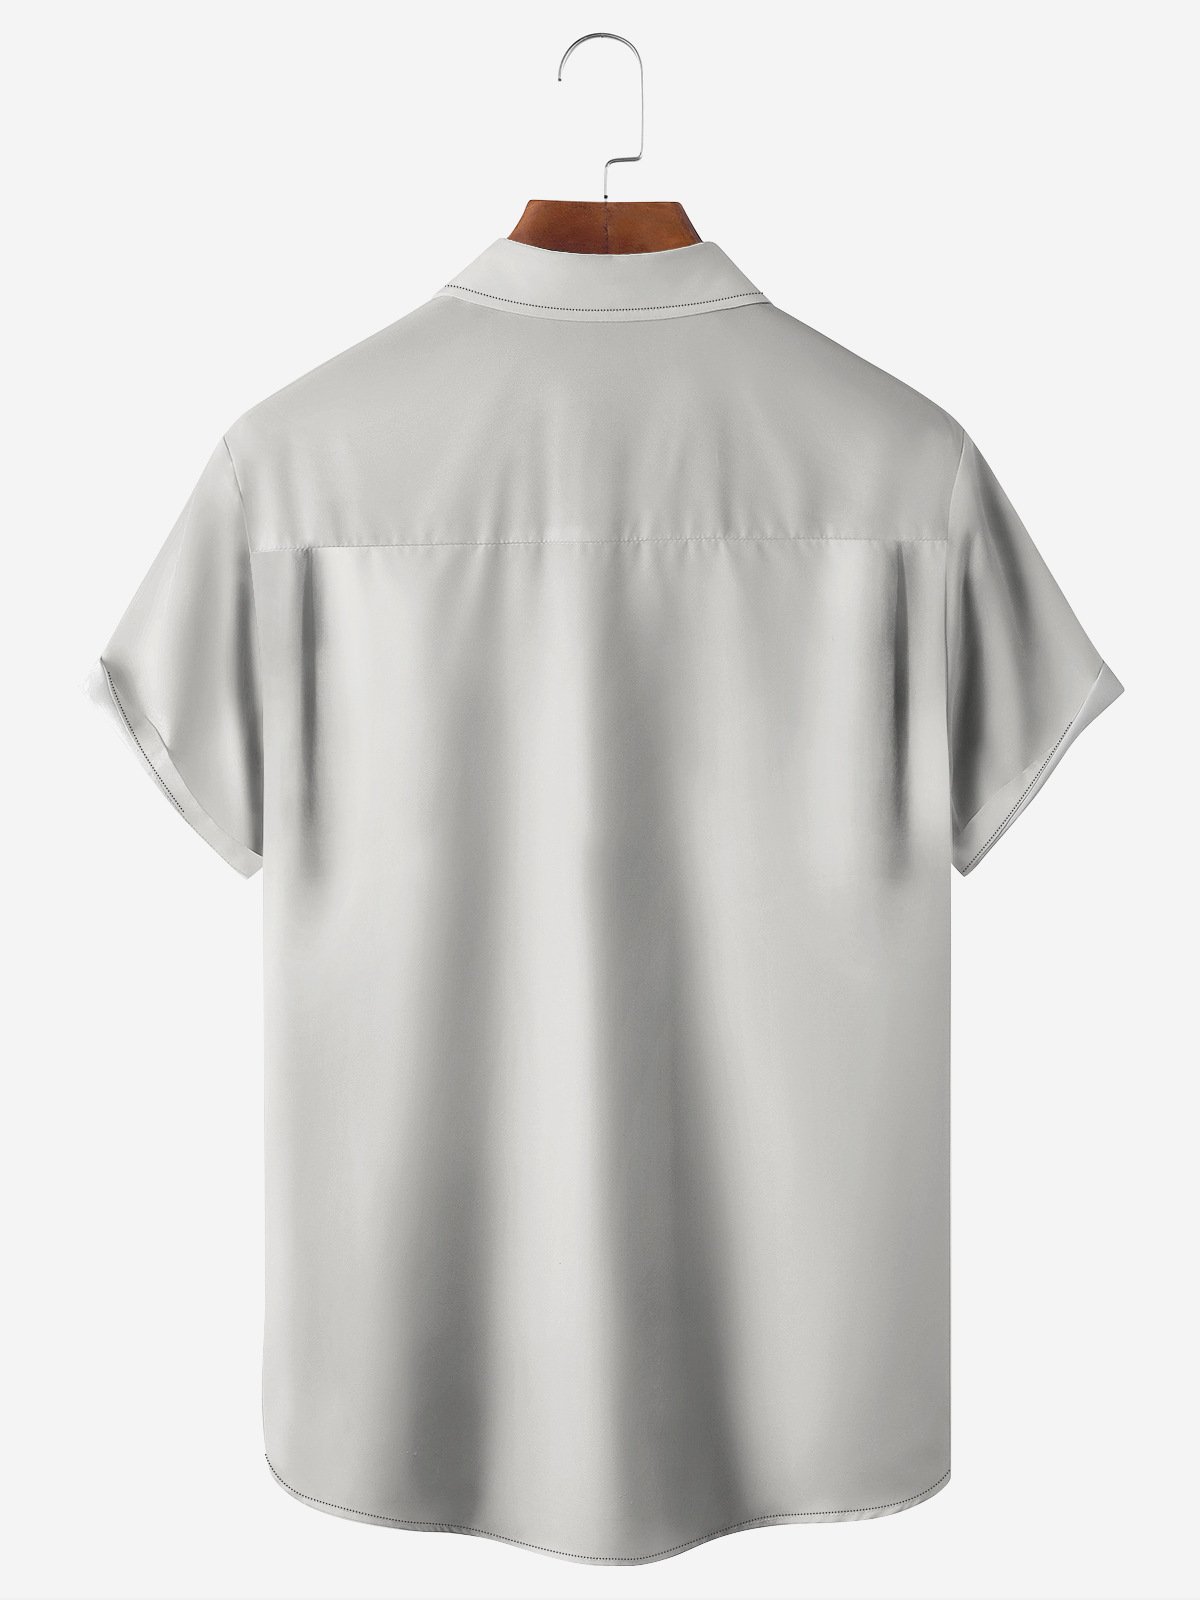 Hardaddy Geometry Chest Pocket Short Sleeve Bowling Shirt